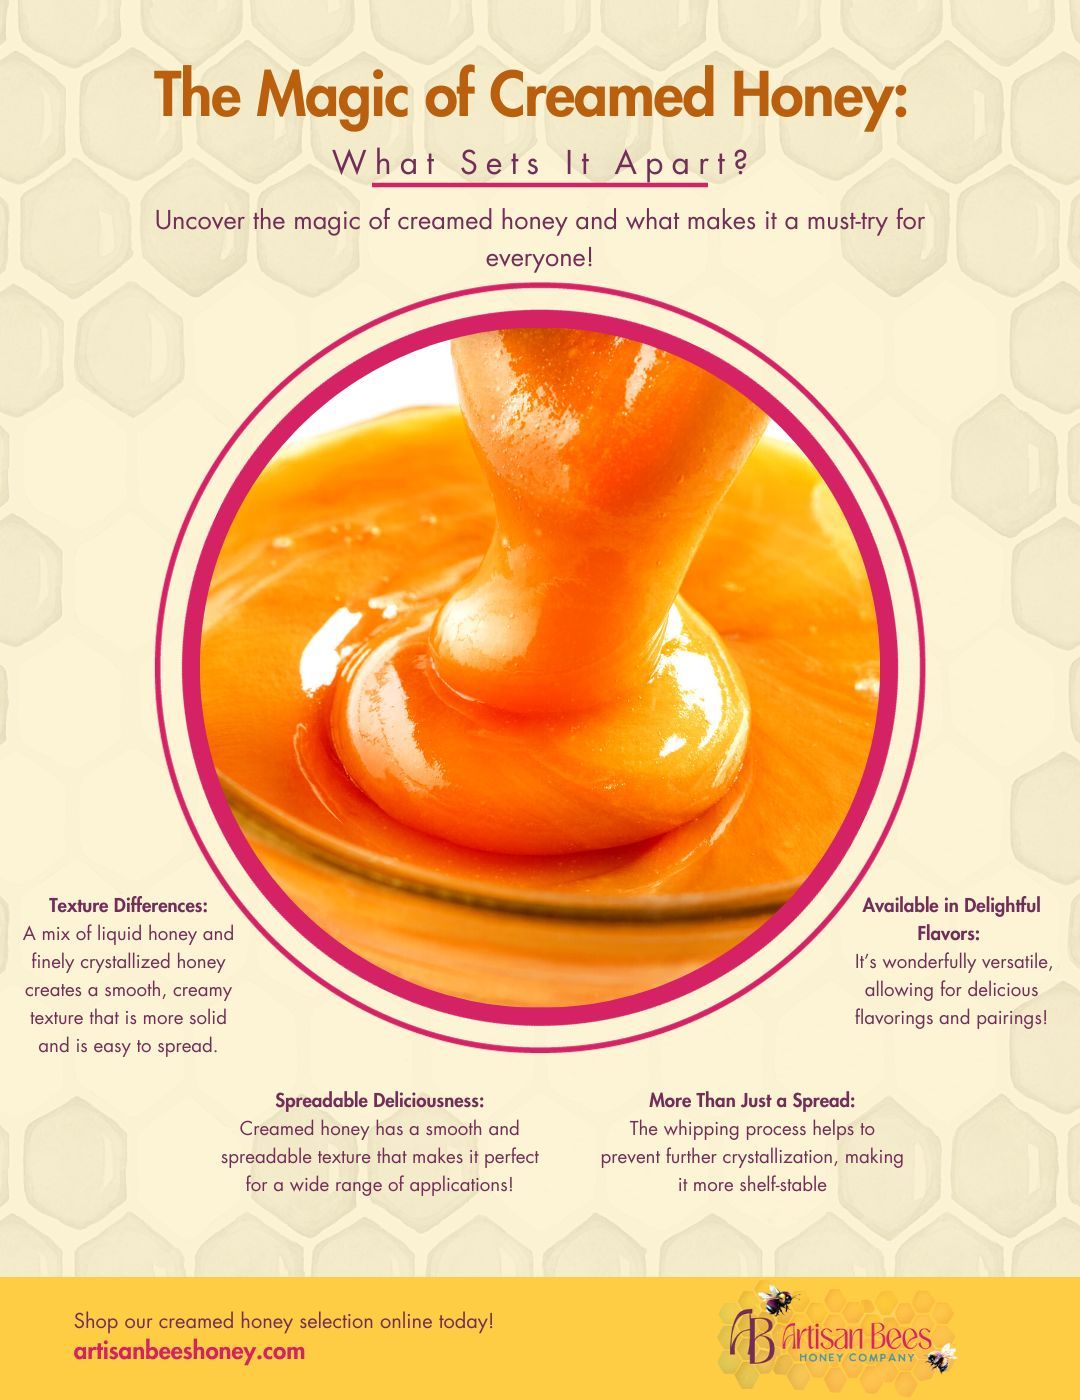 M42706 - The Magic of Creamed Honey What Sets It Apart (1).jpg